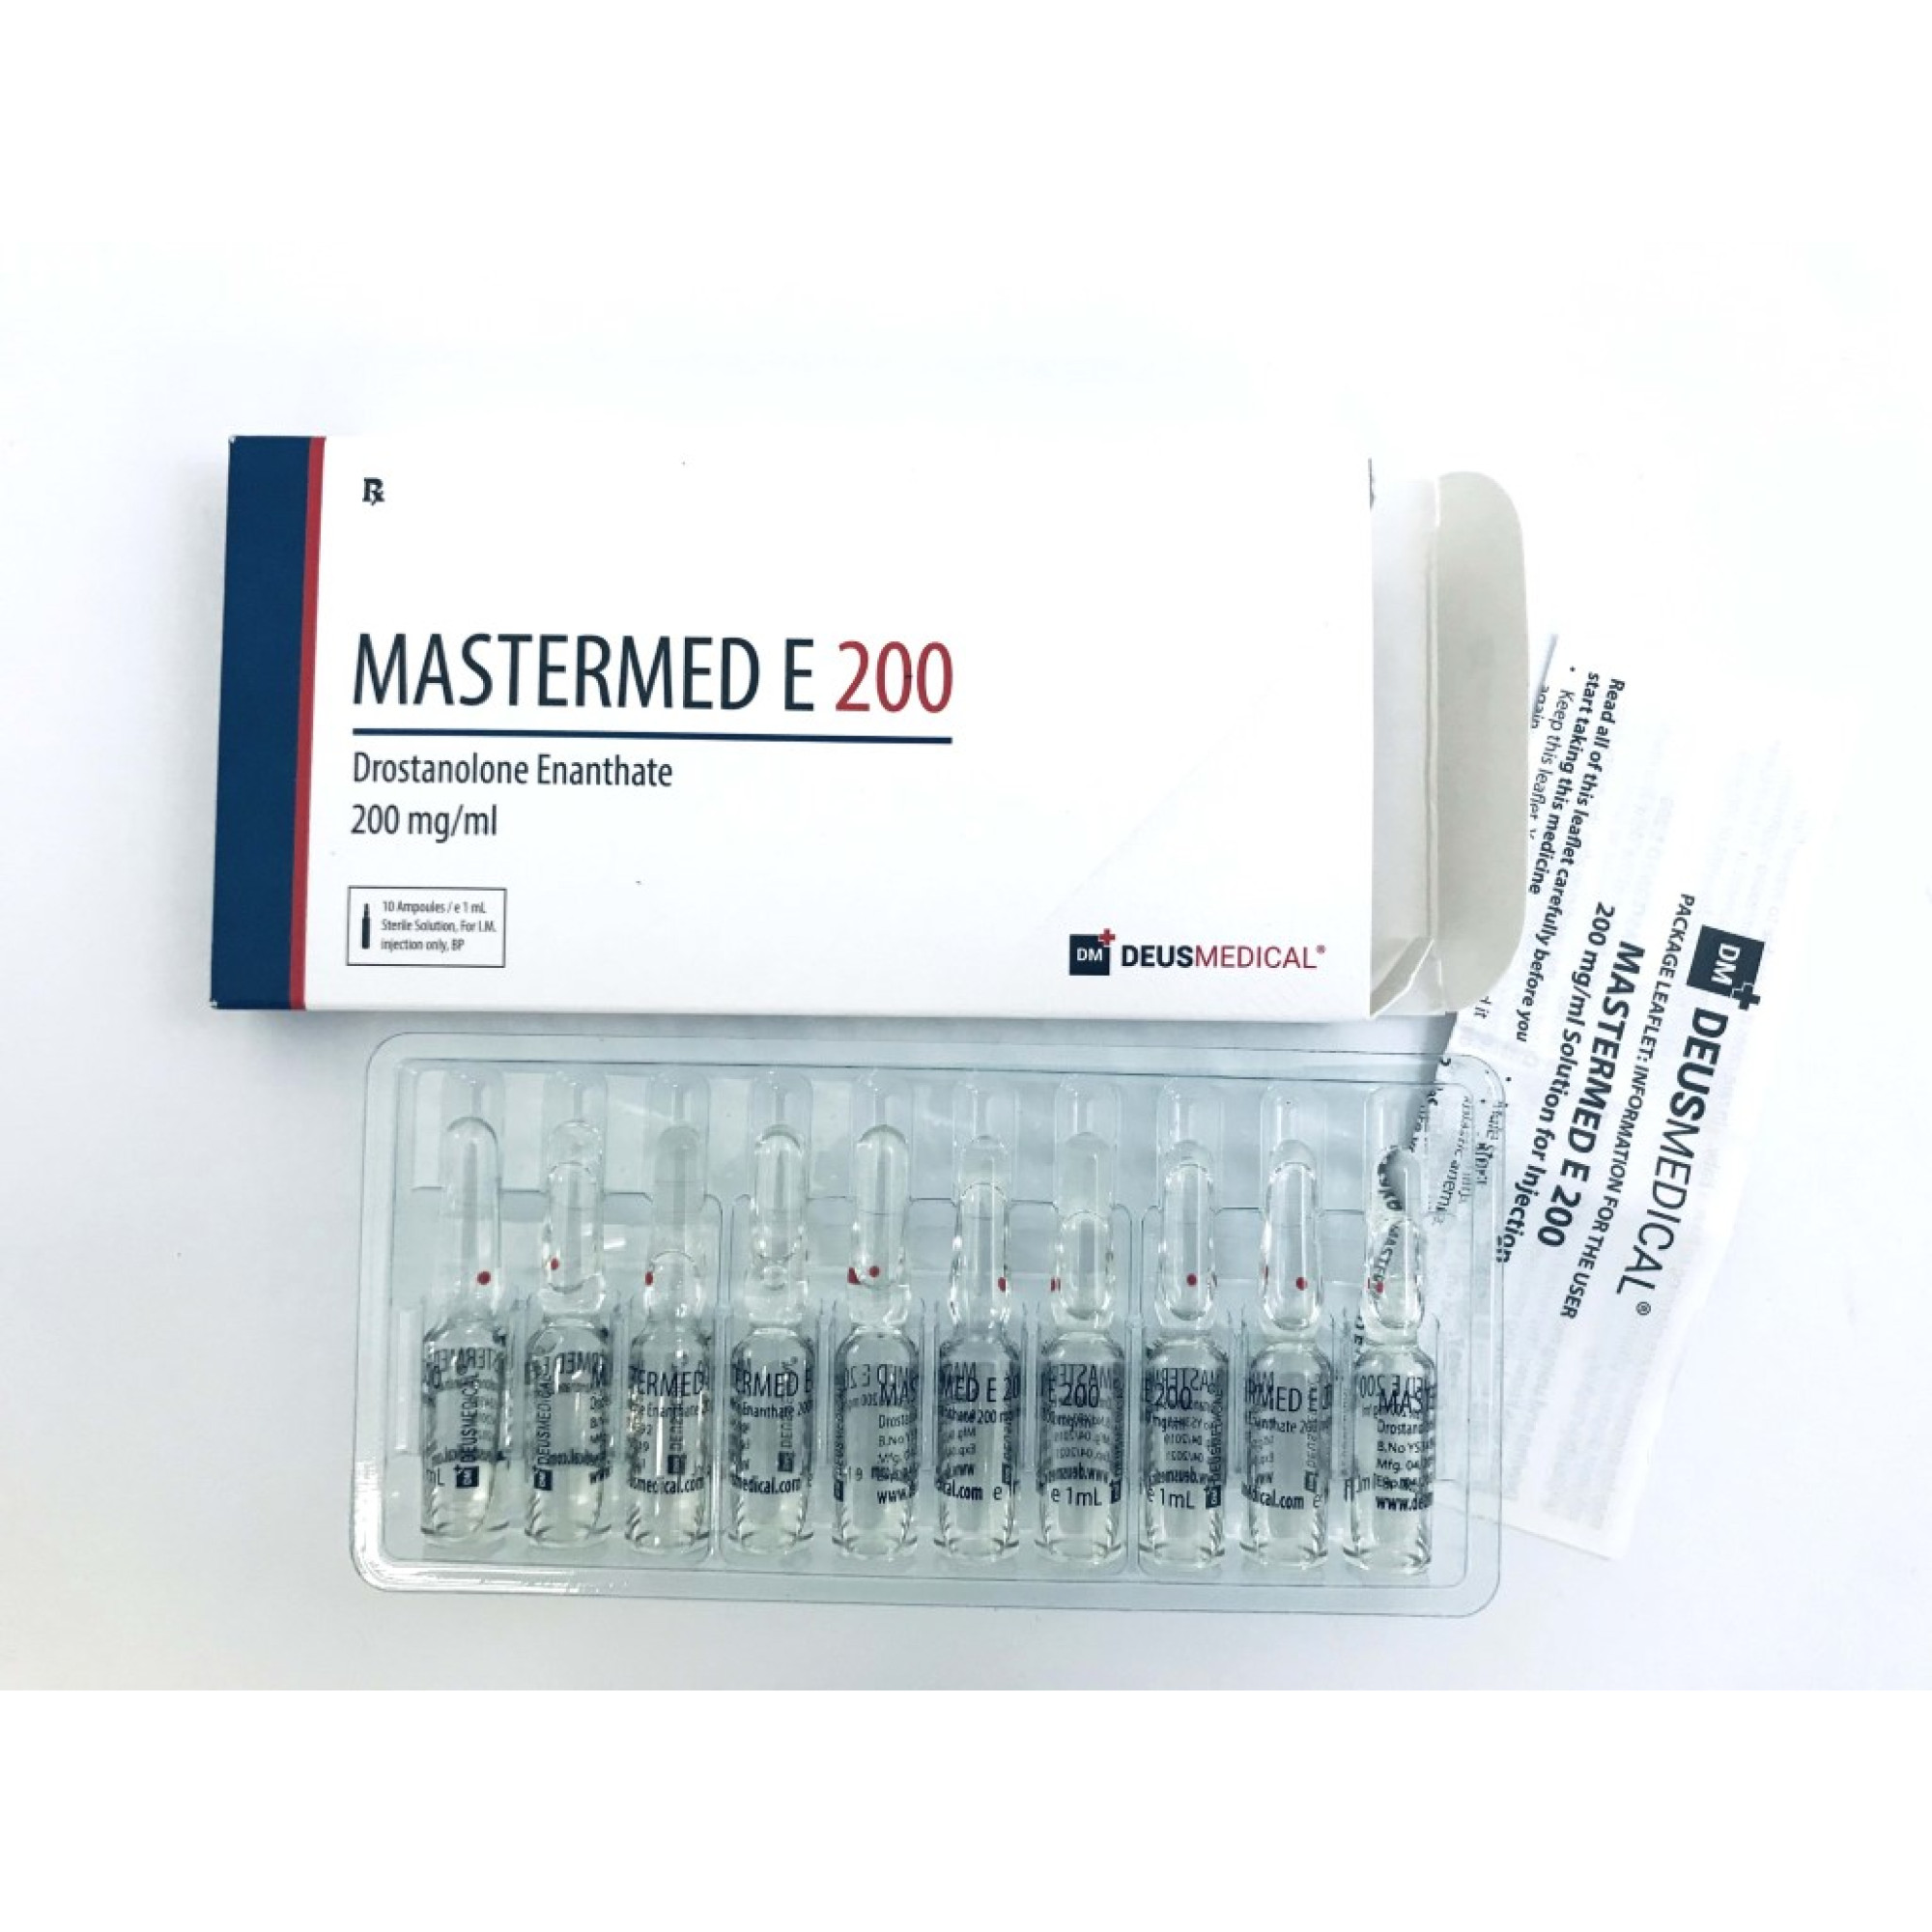 MASTERMED E 200 (Drostanolon Enantat), Deus Medical, Kaufen Sie Steroide Online - www.deuspower.shop